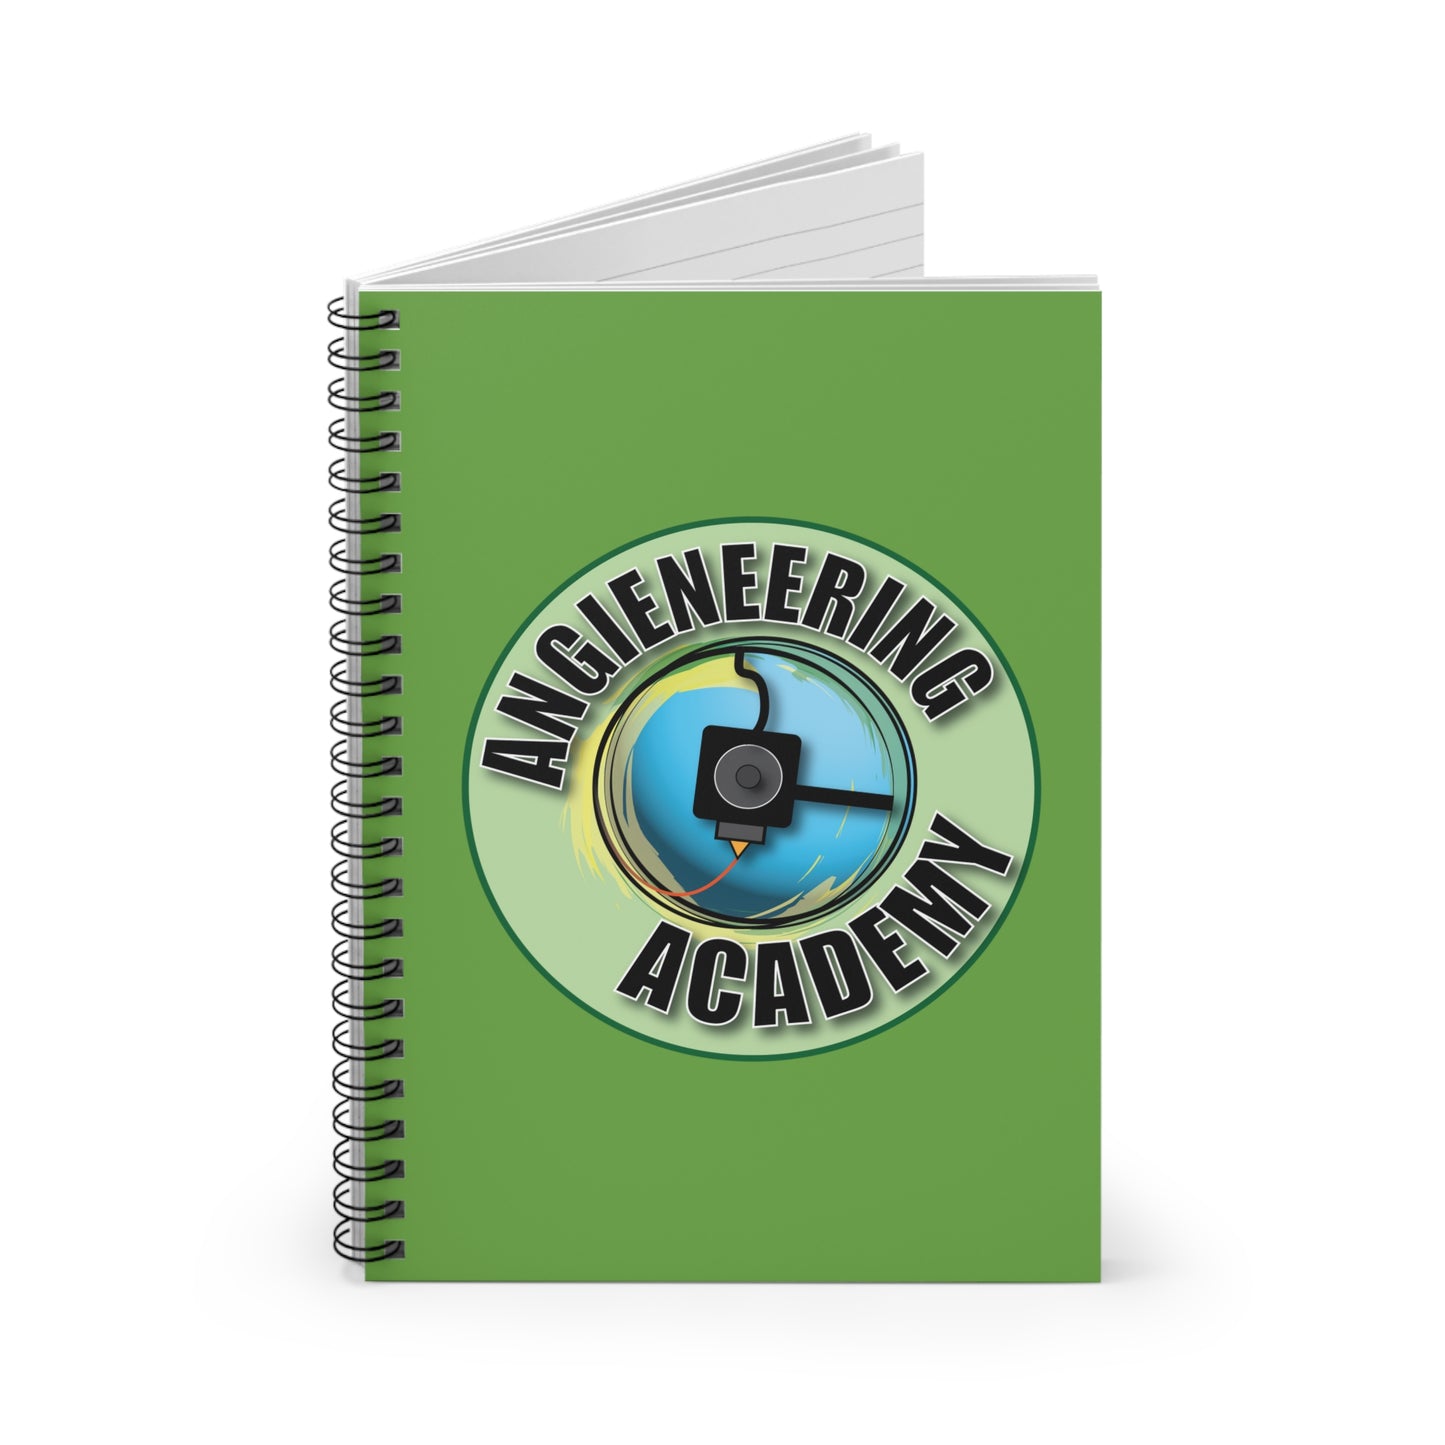 Angieneering Academy Notebook